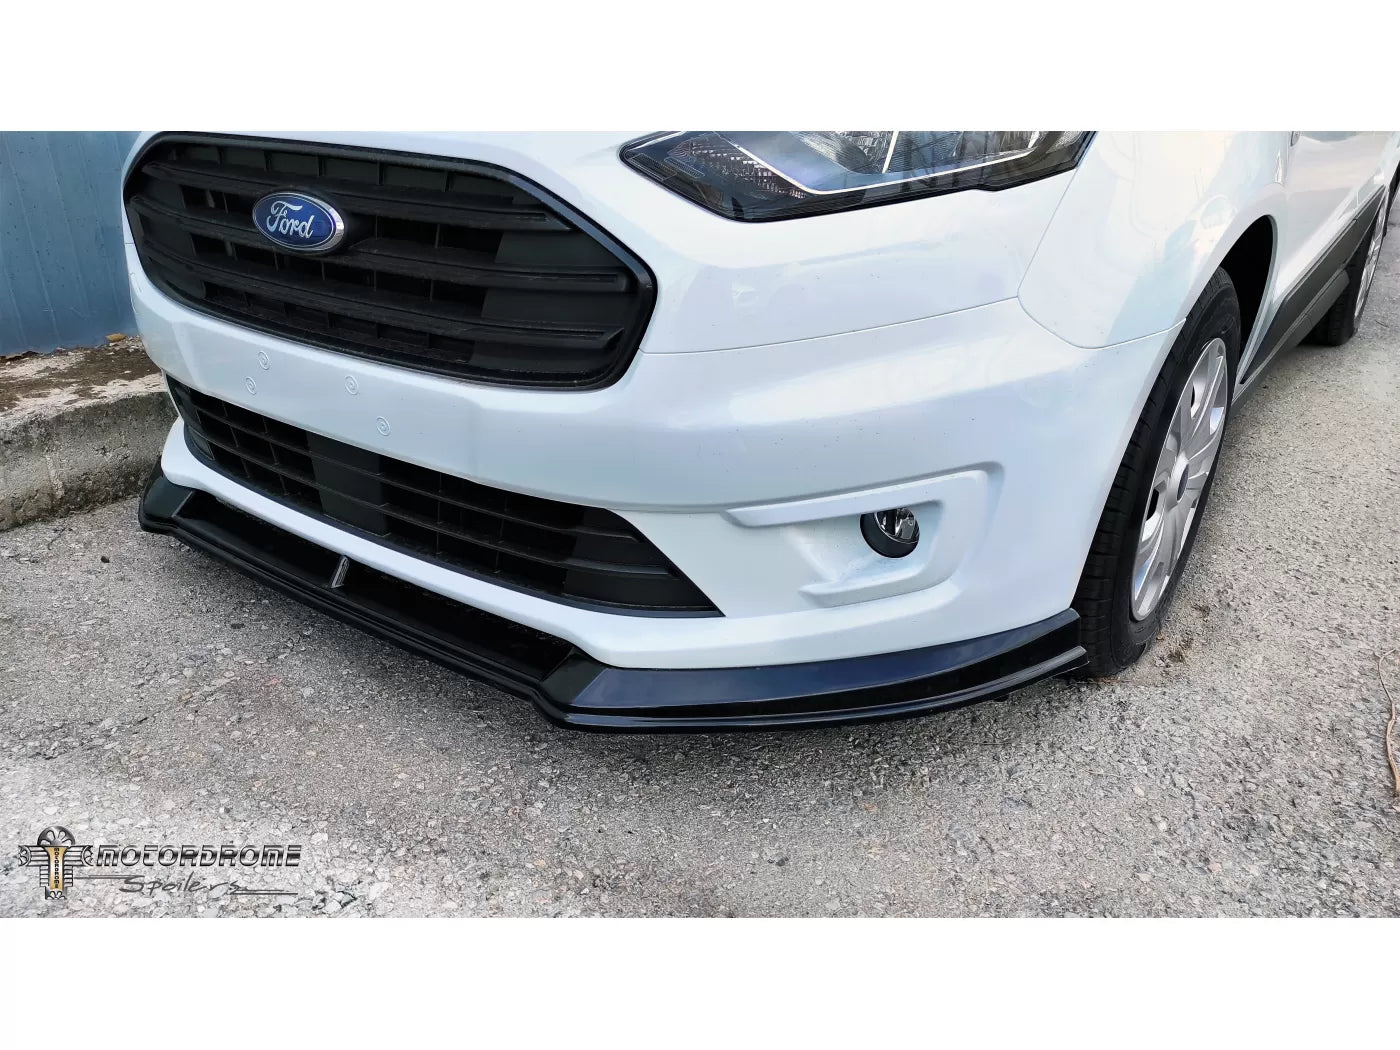 Motordrome Design Front Bumper Splitter Lower Valance Ford Transit Connect Facelift FL 2019+ ABS Plastic